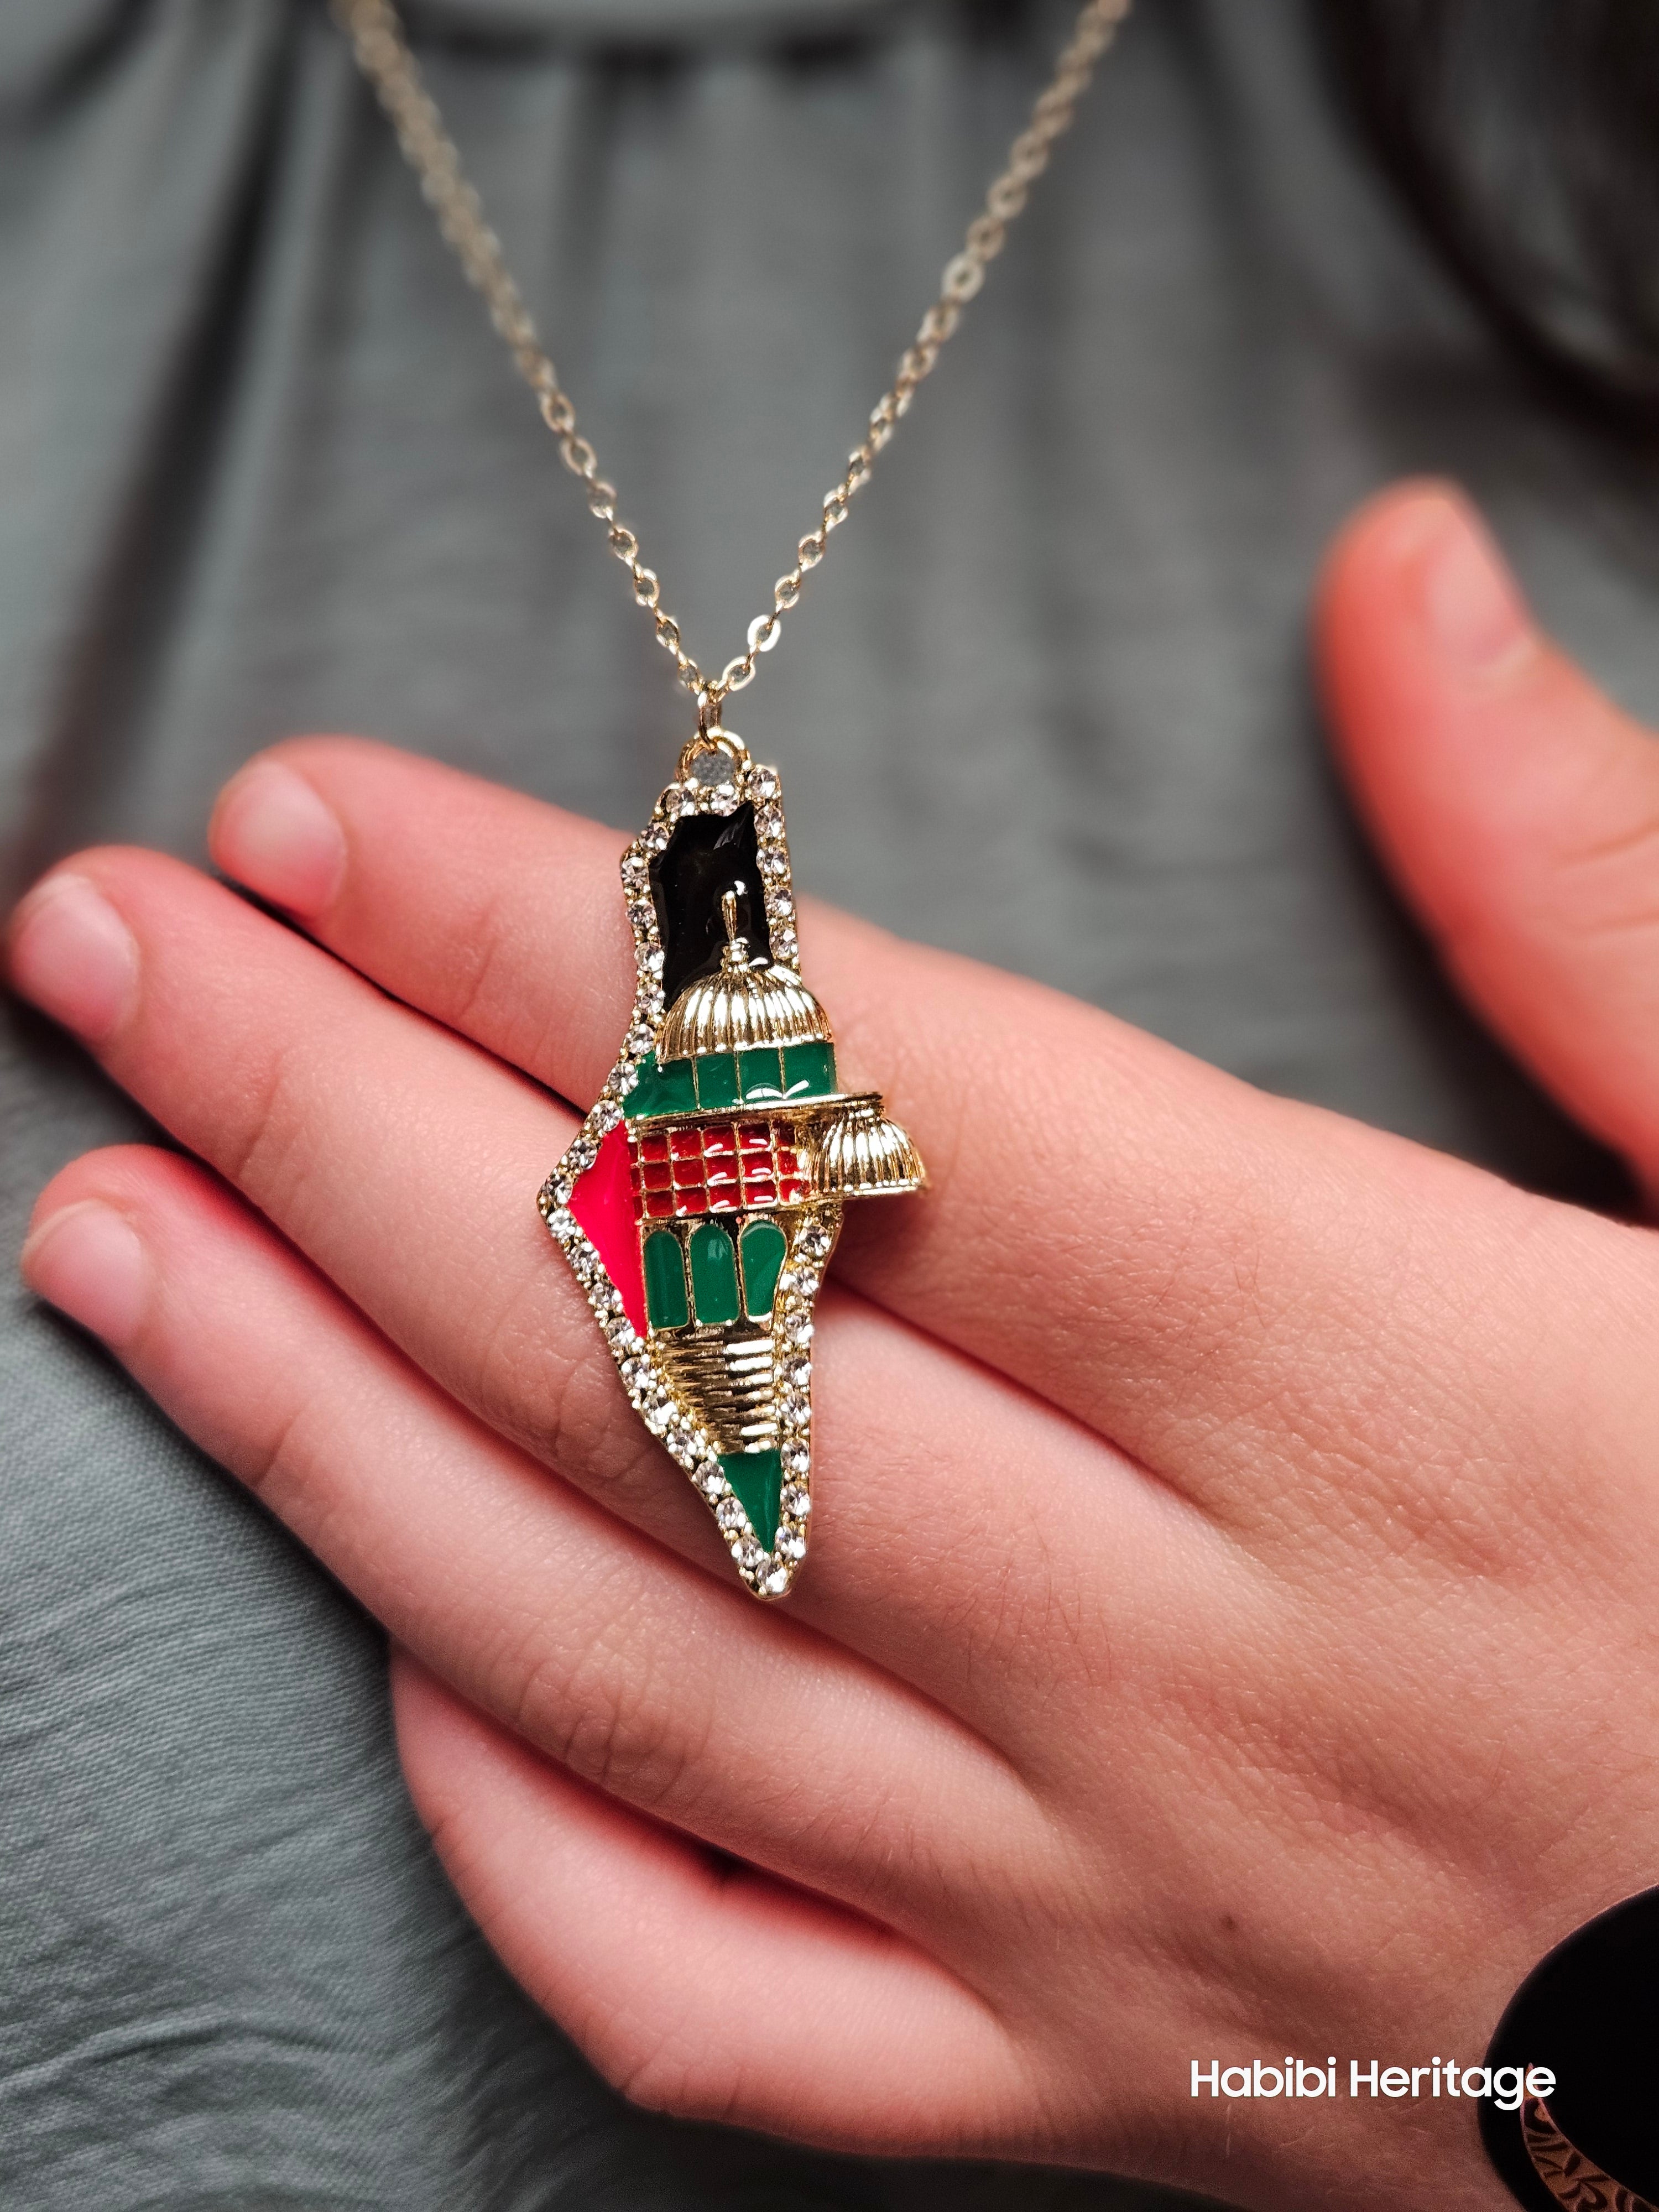 Palestine Quds 3D Necklace - Habibi Heritage